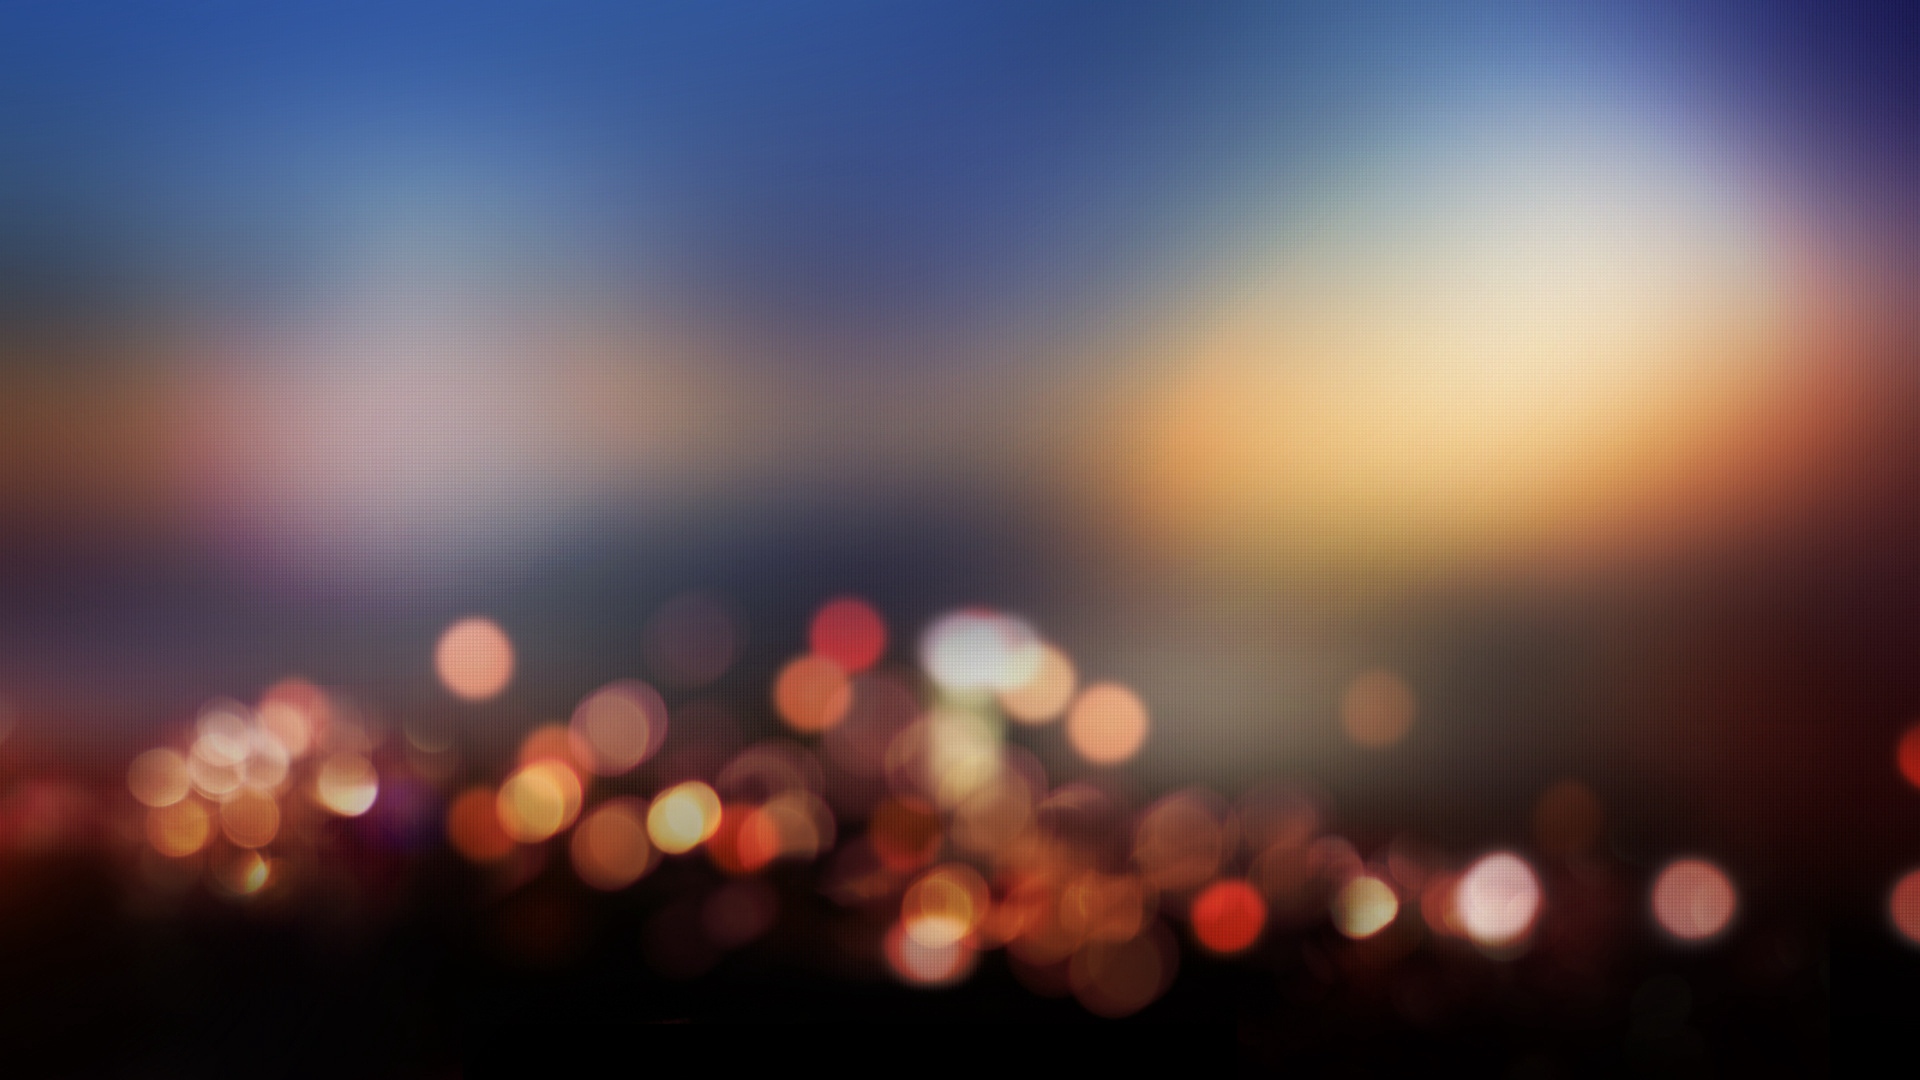 Wallpaper Lights, Night City, Blurring - Blurred City Lights - HD Wallpaper 